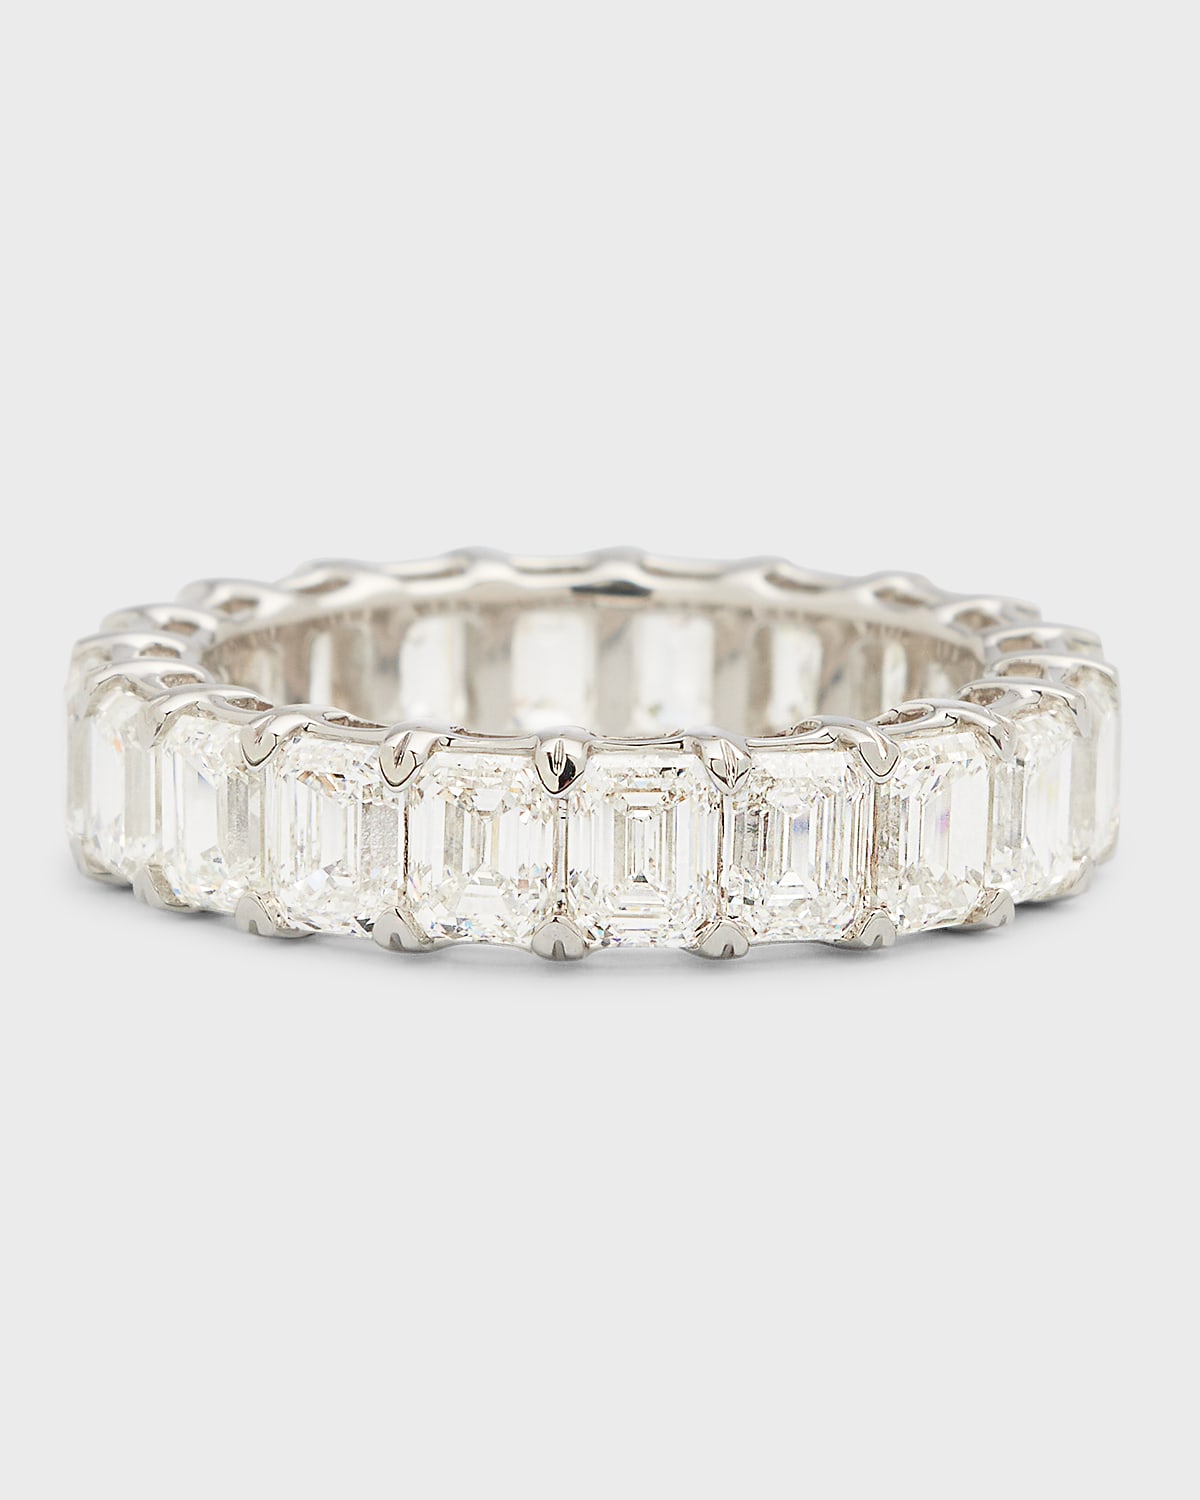 18K White Gold Emerald-Cut Diamond Eternity Band Ring, 6.0tcw